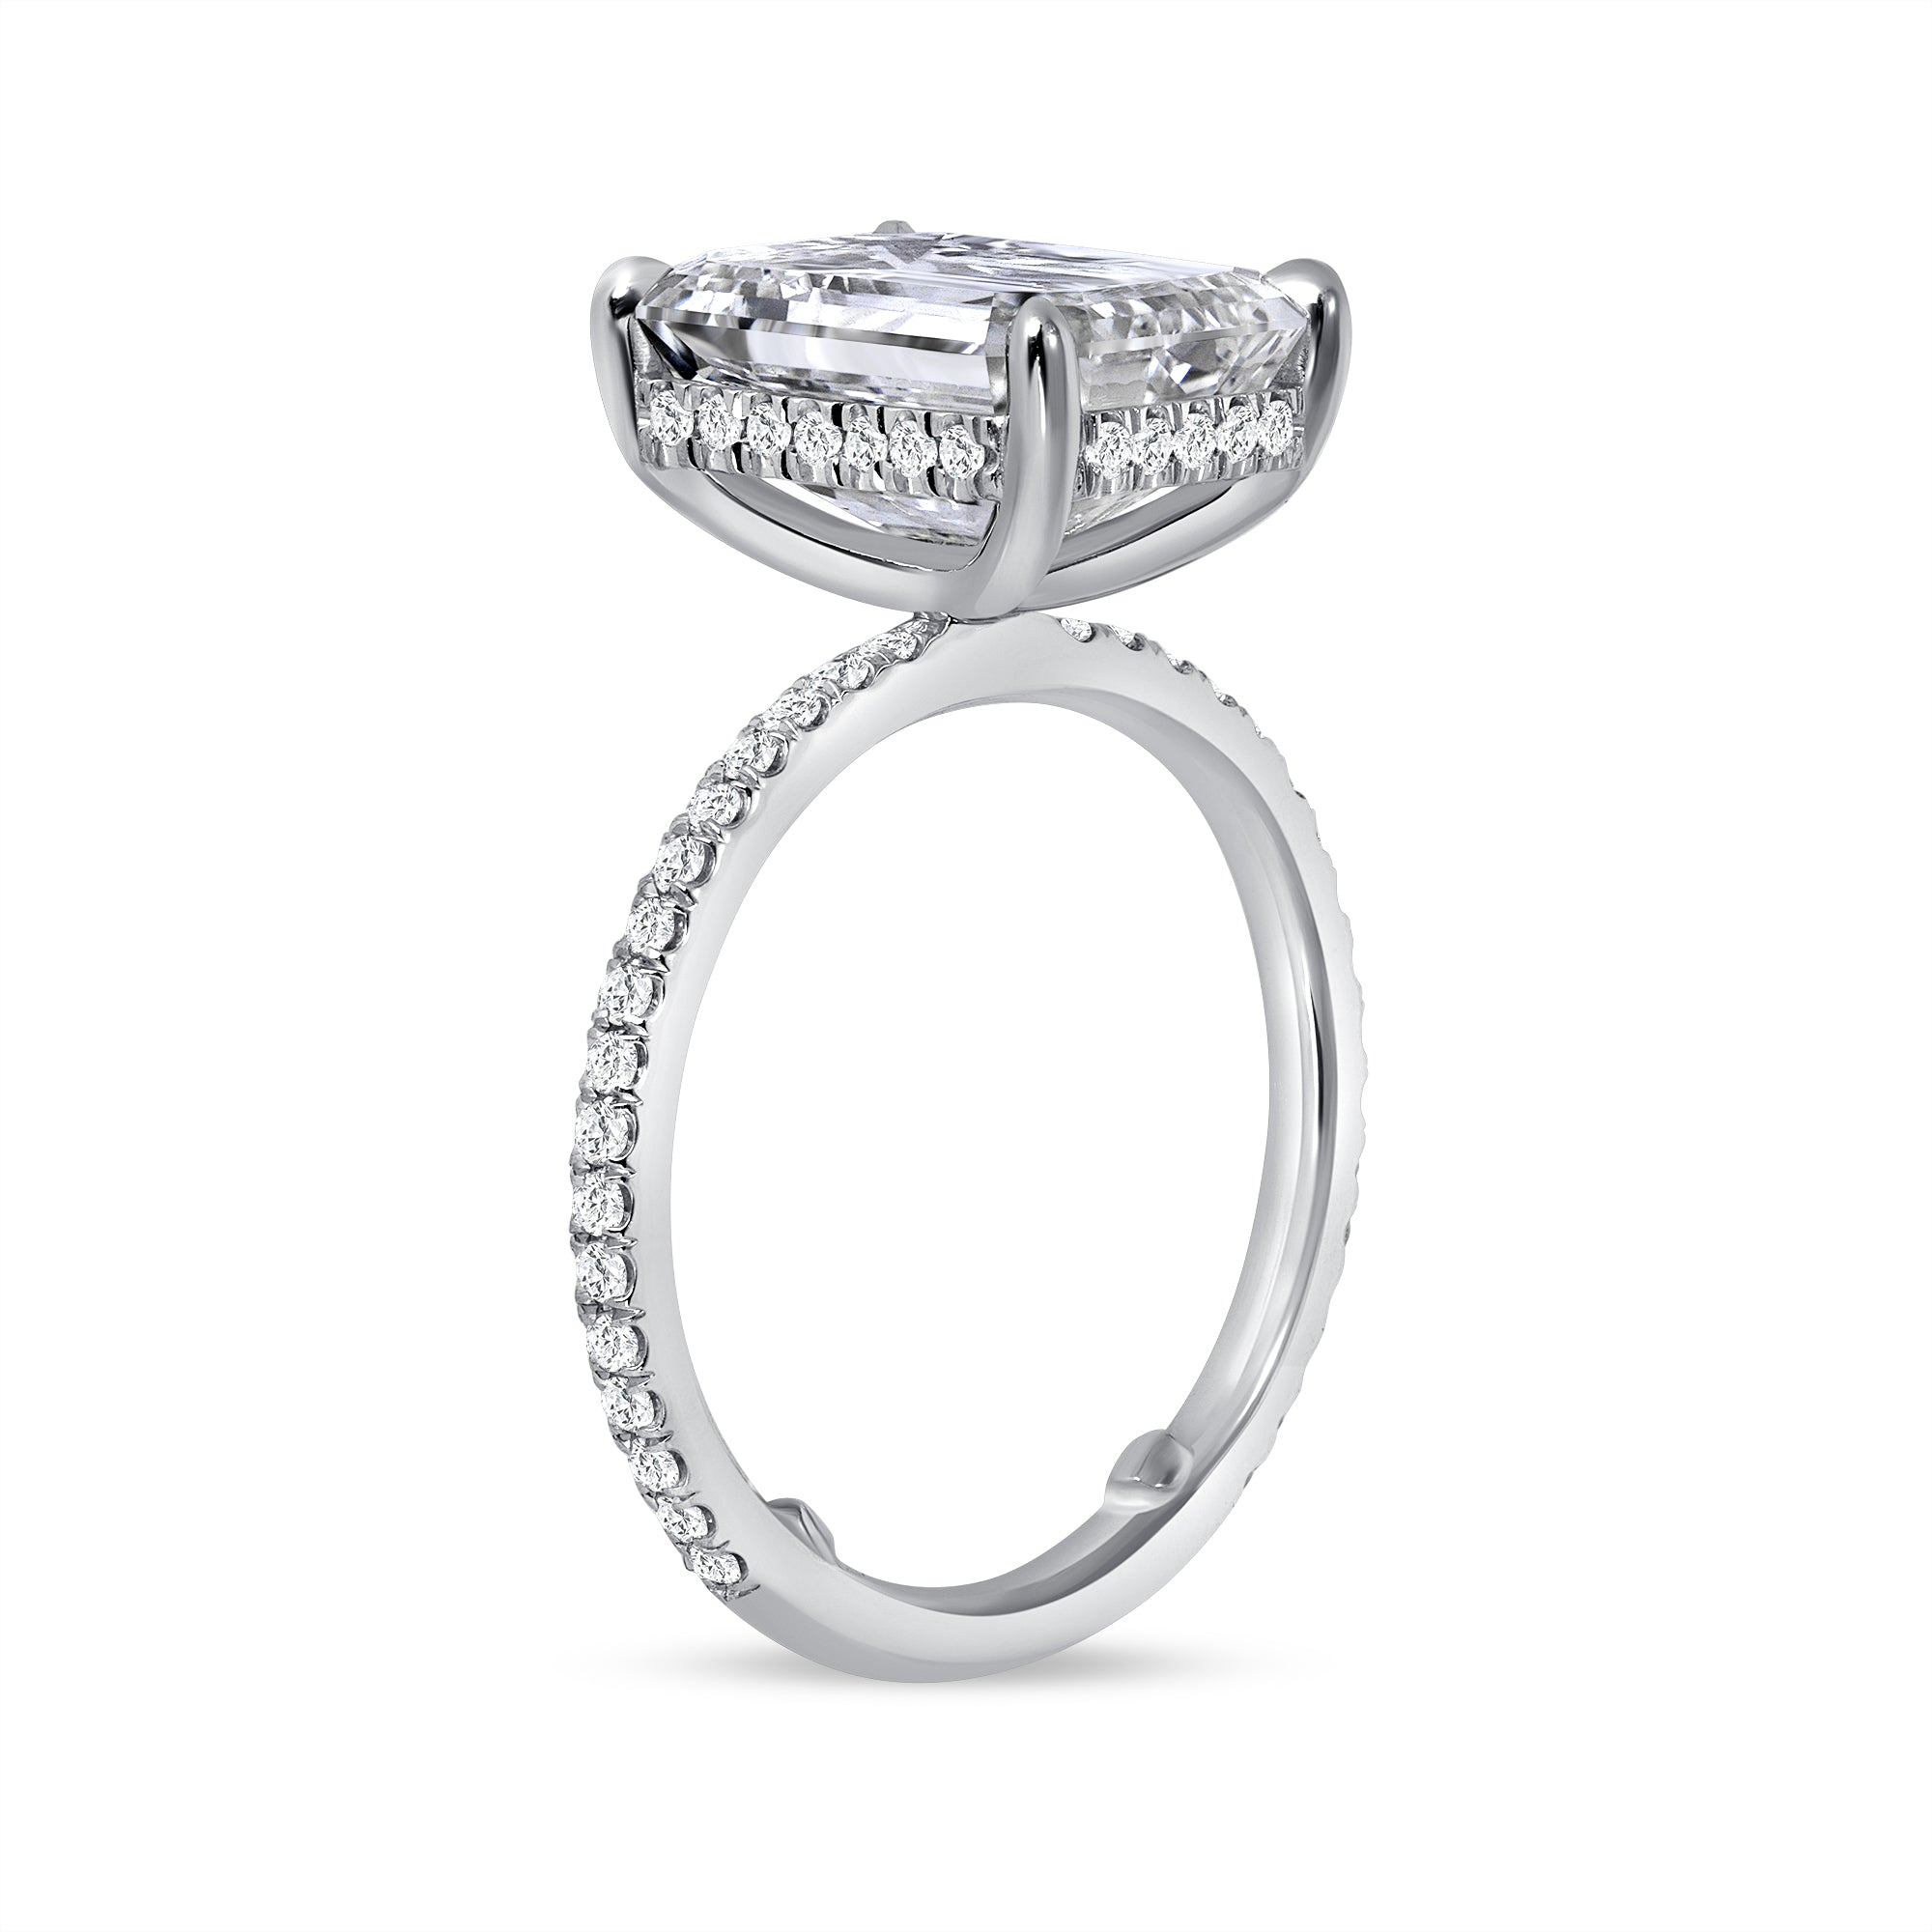 Emerald Cut Diamond Hidden Halo Engagement Ring with Pavé Band in Platinum Ruthenium